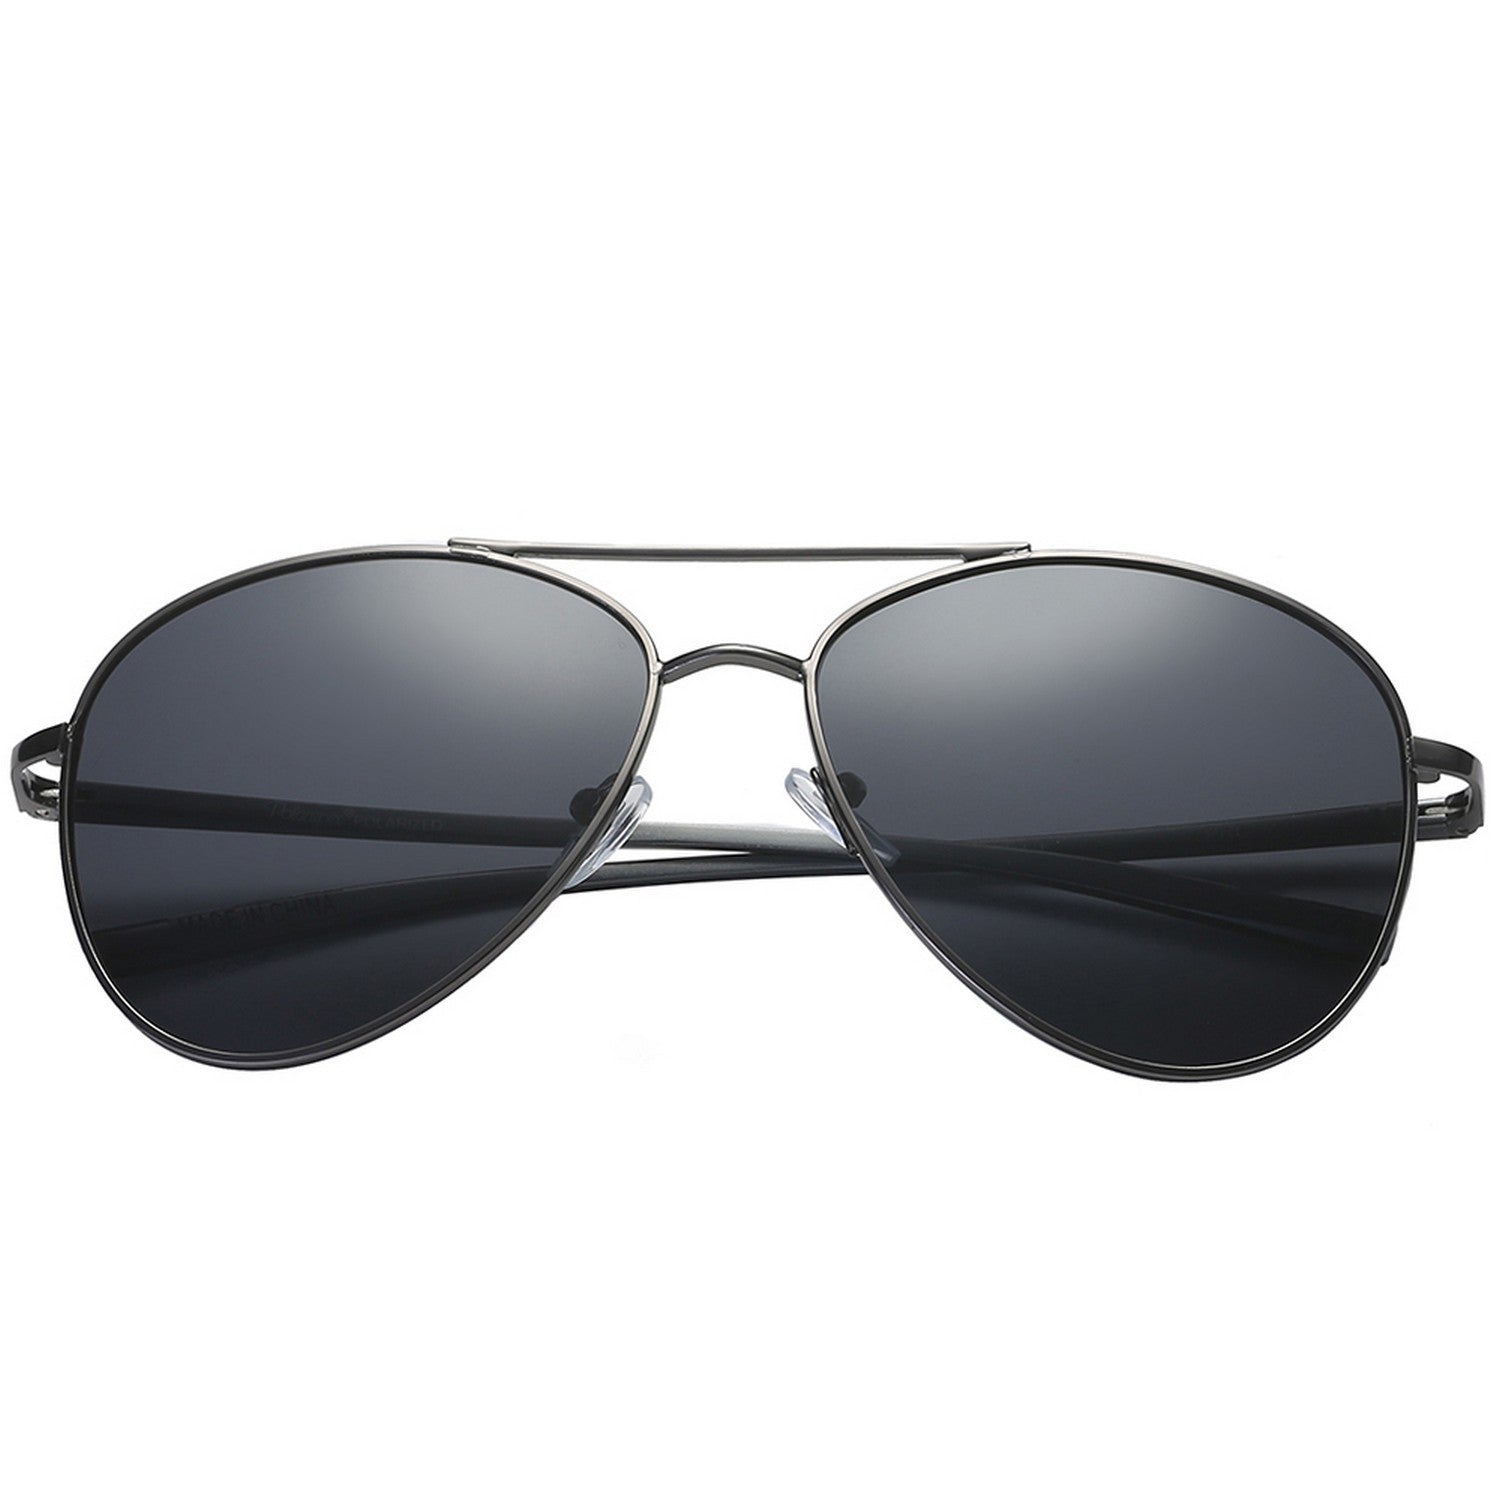 Classic Aviator Style Polarized Sunglasses with Ultra Light Flex